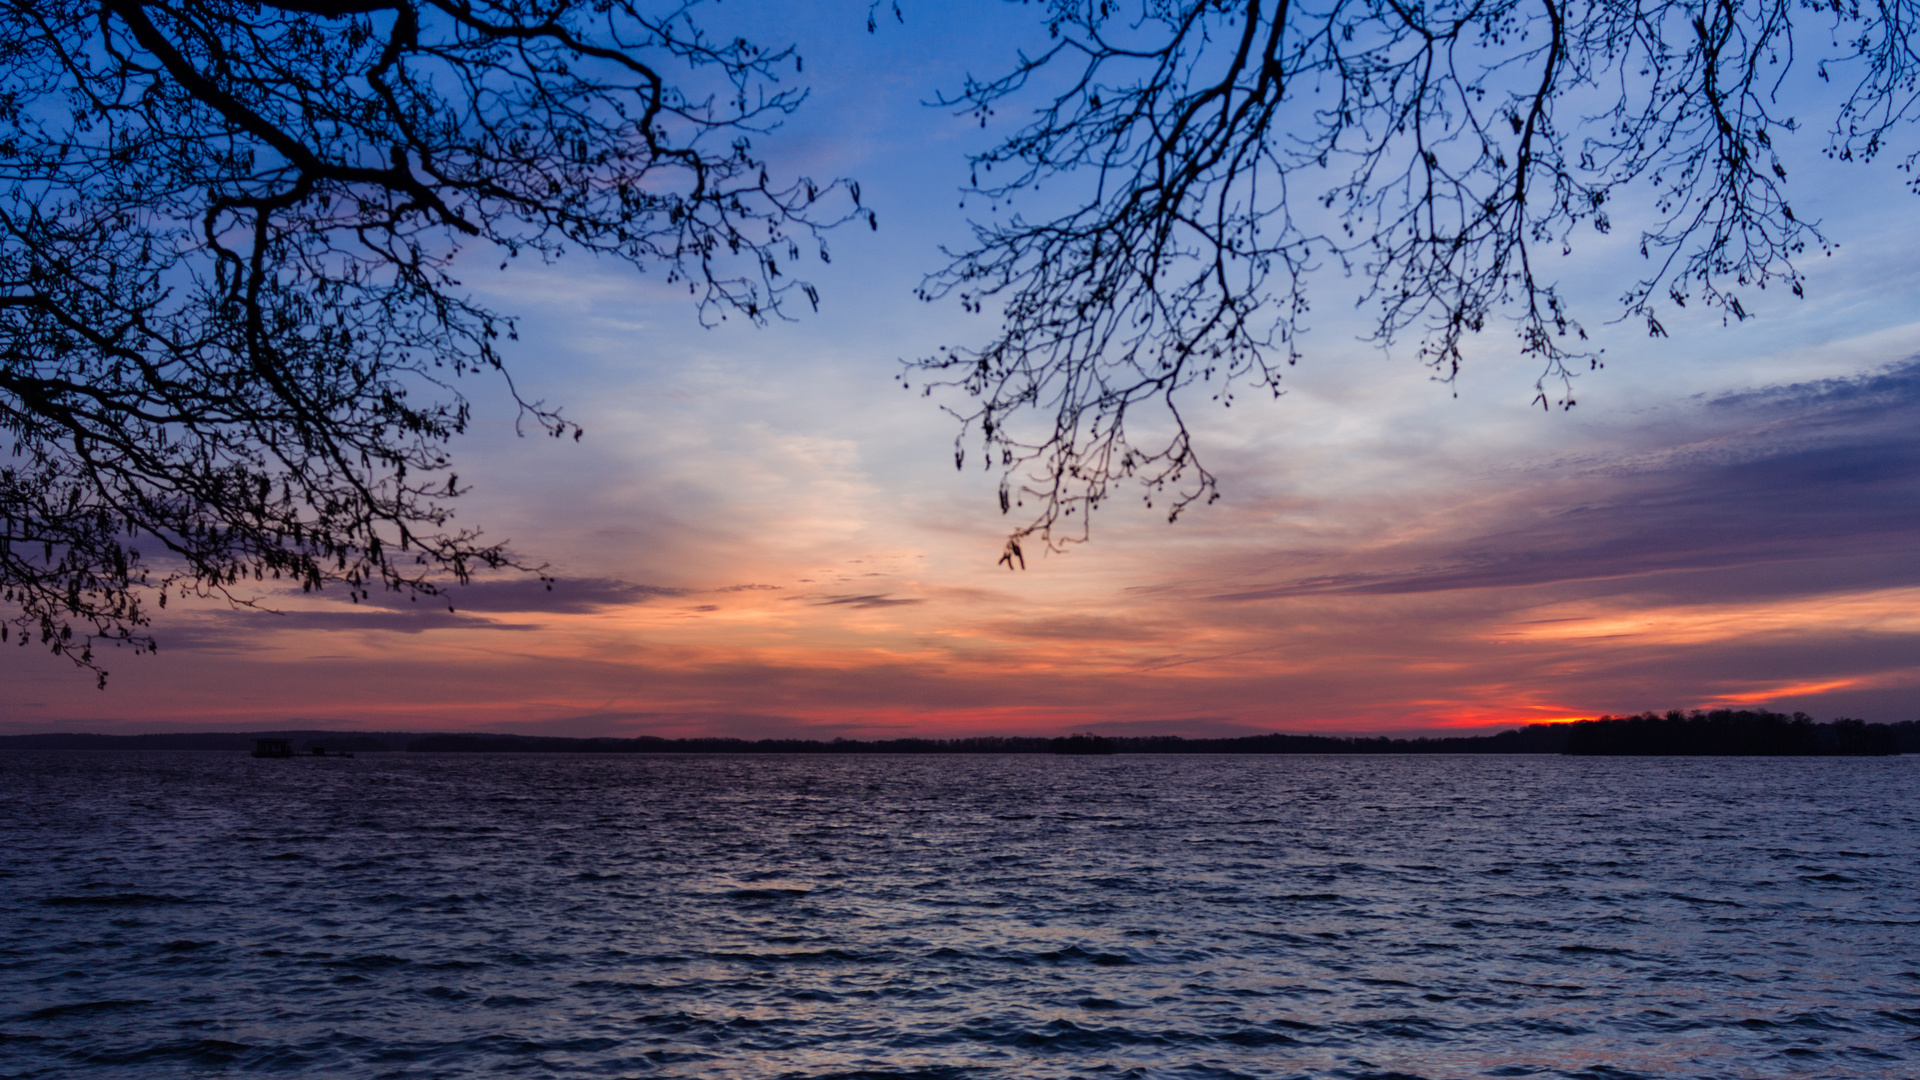 2.Sonnenuntergang am Plöne See